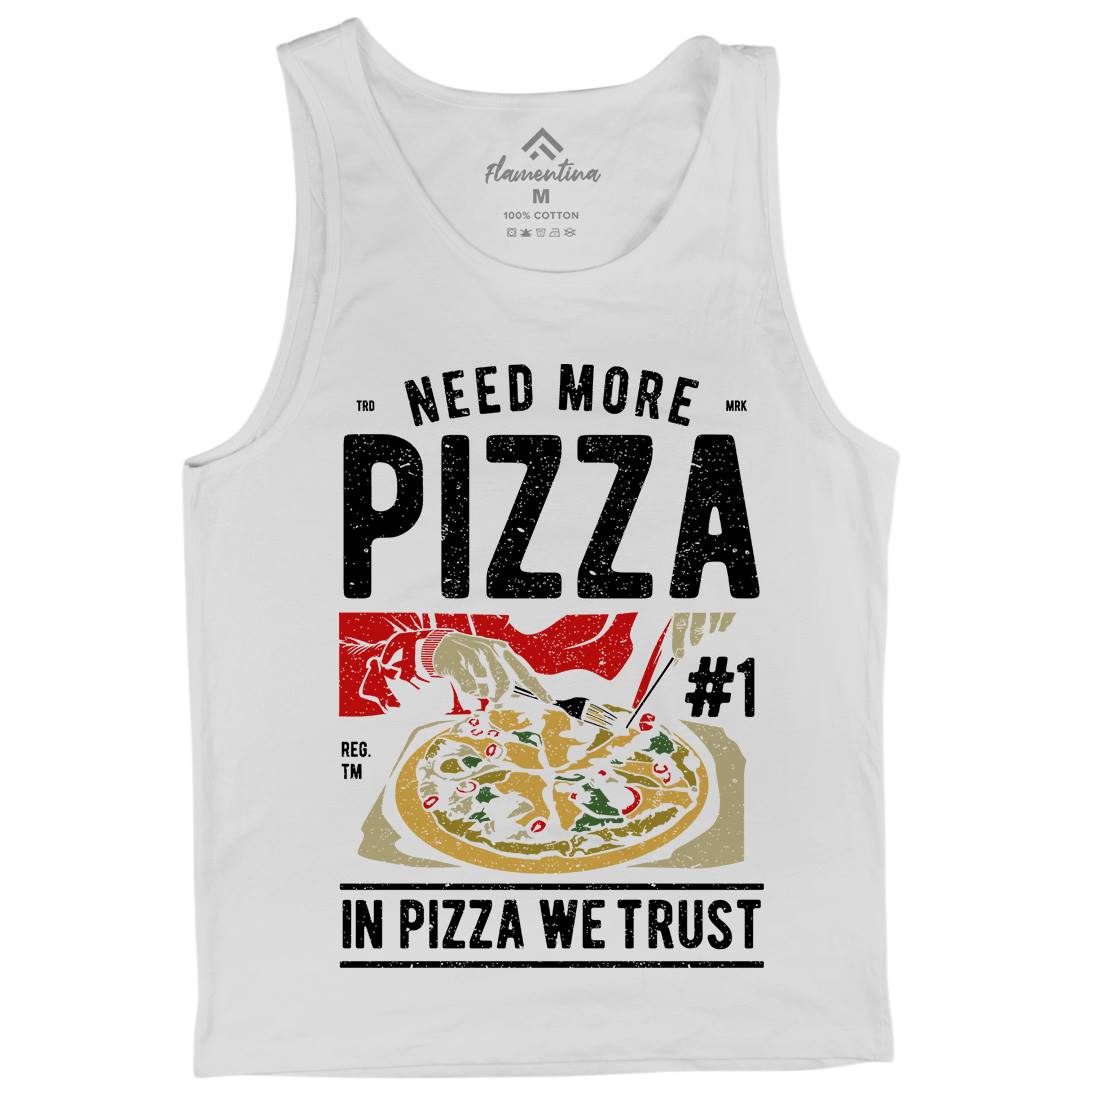 Need More Pizza Mens Tank Top Vest Food A727